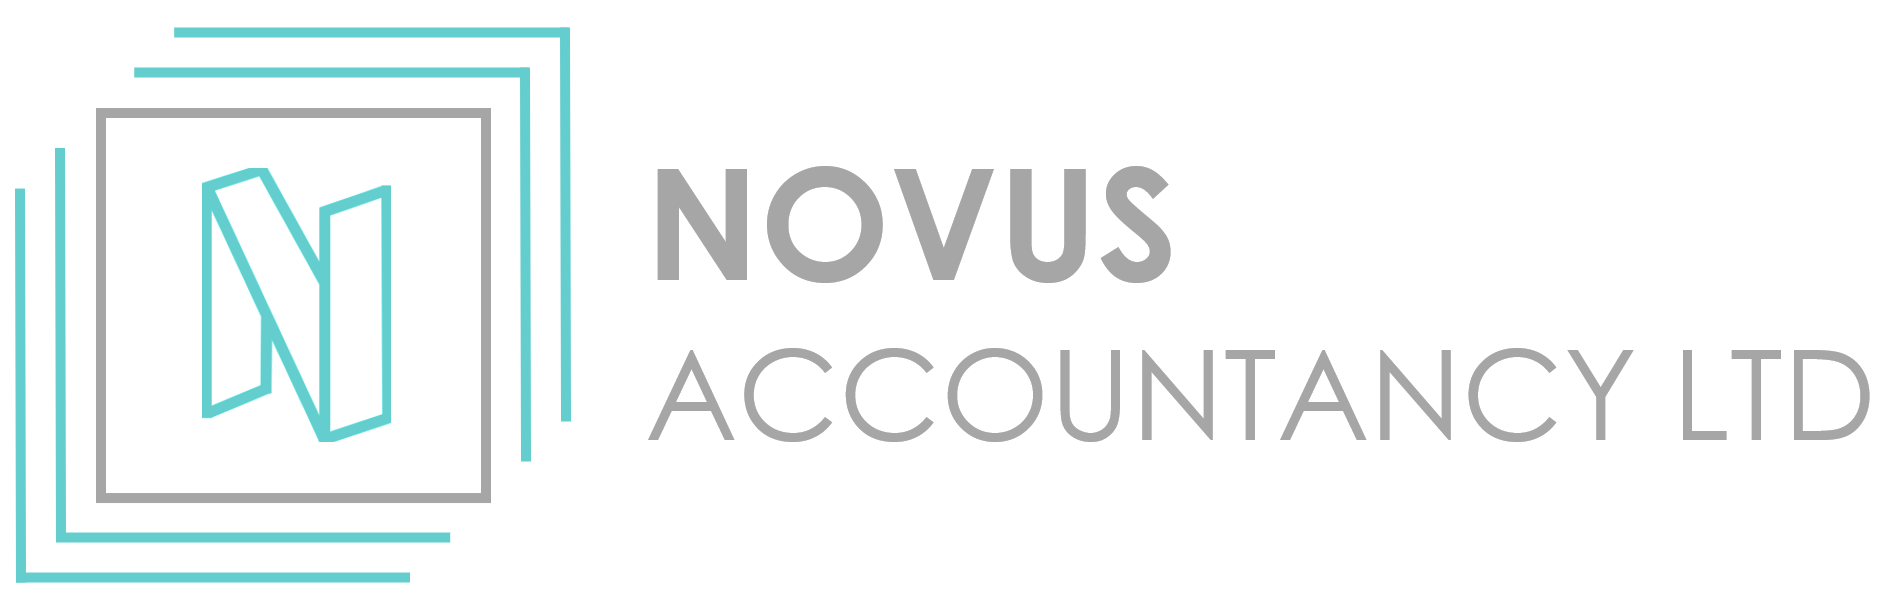 Novus Accountancy Ltd Logo